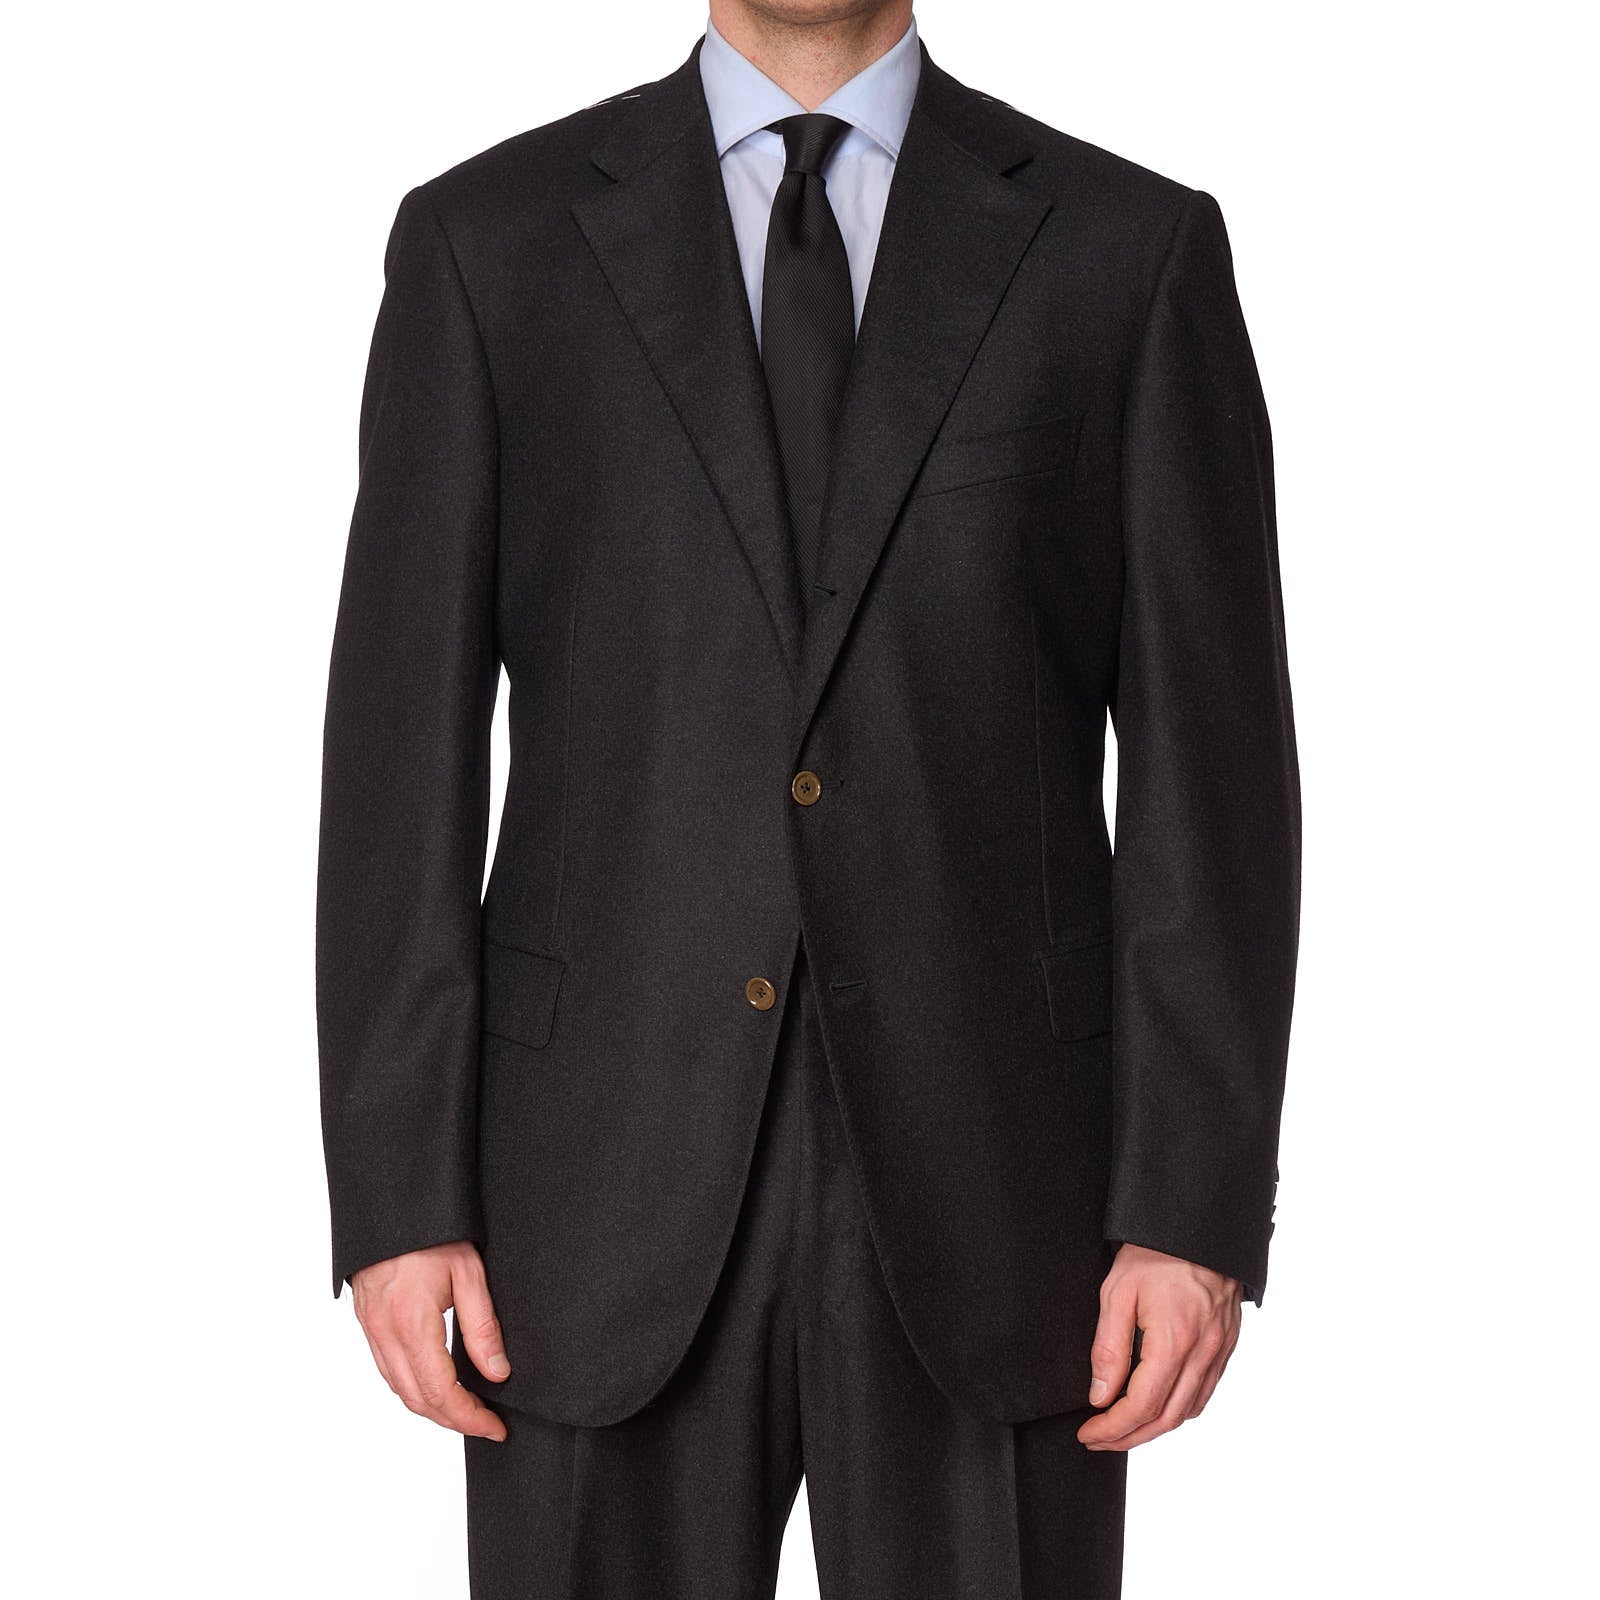 SARTORIA PARTENOPEA Charcoal Gray Wool Handmade Suit EU 56 NEW US 44 46